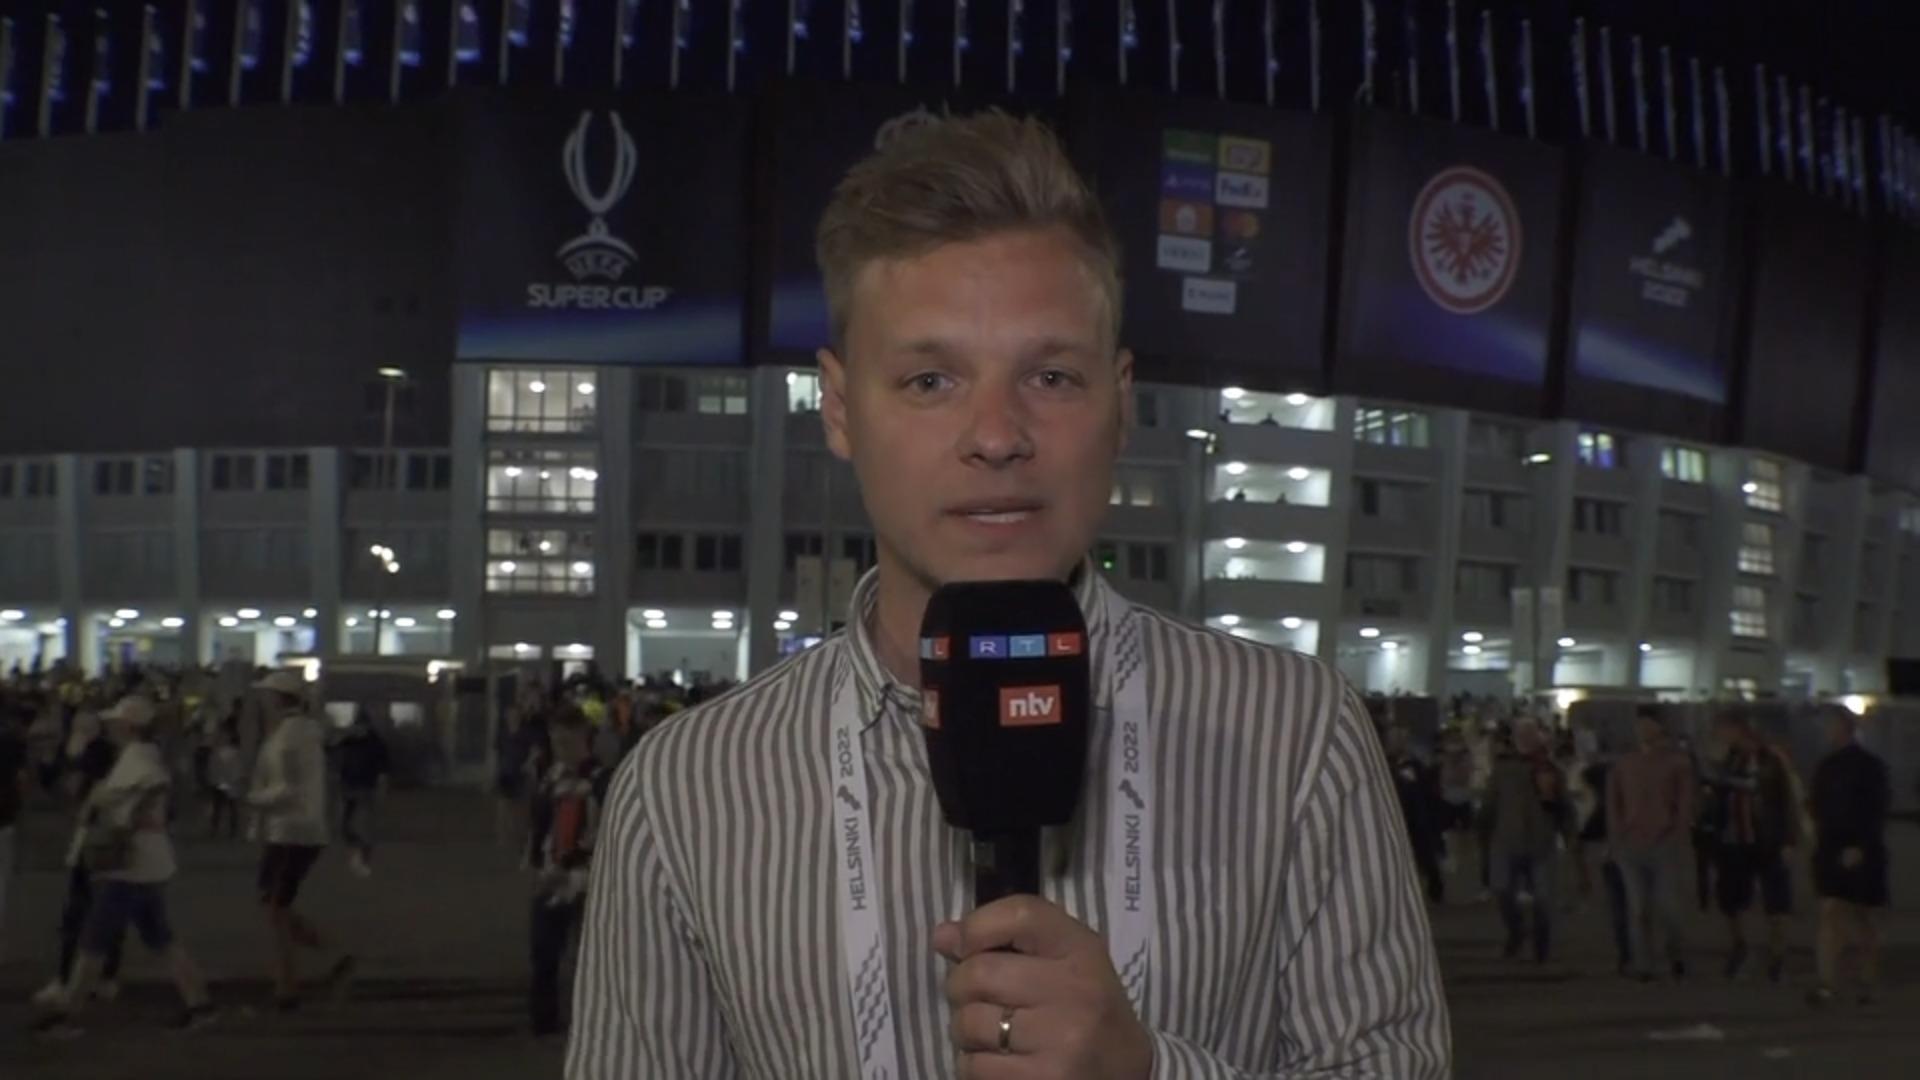 RTL-Reporter vom SuperCup in Helsinki Frankfurt verpasst Supercup-Triumph gegen Real